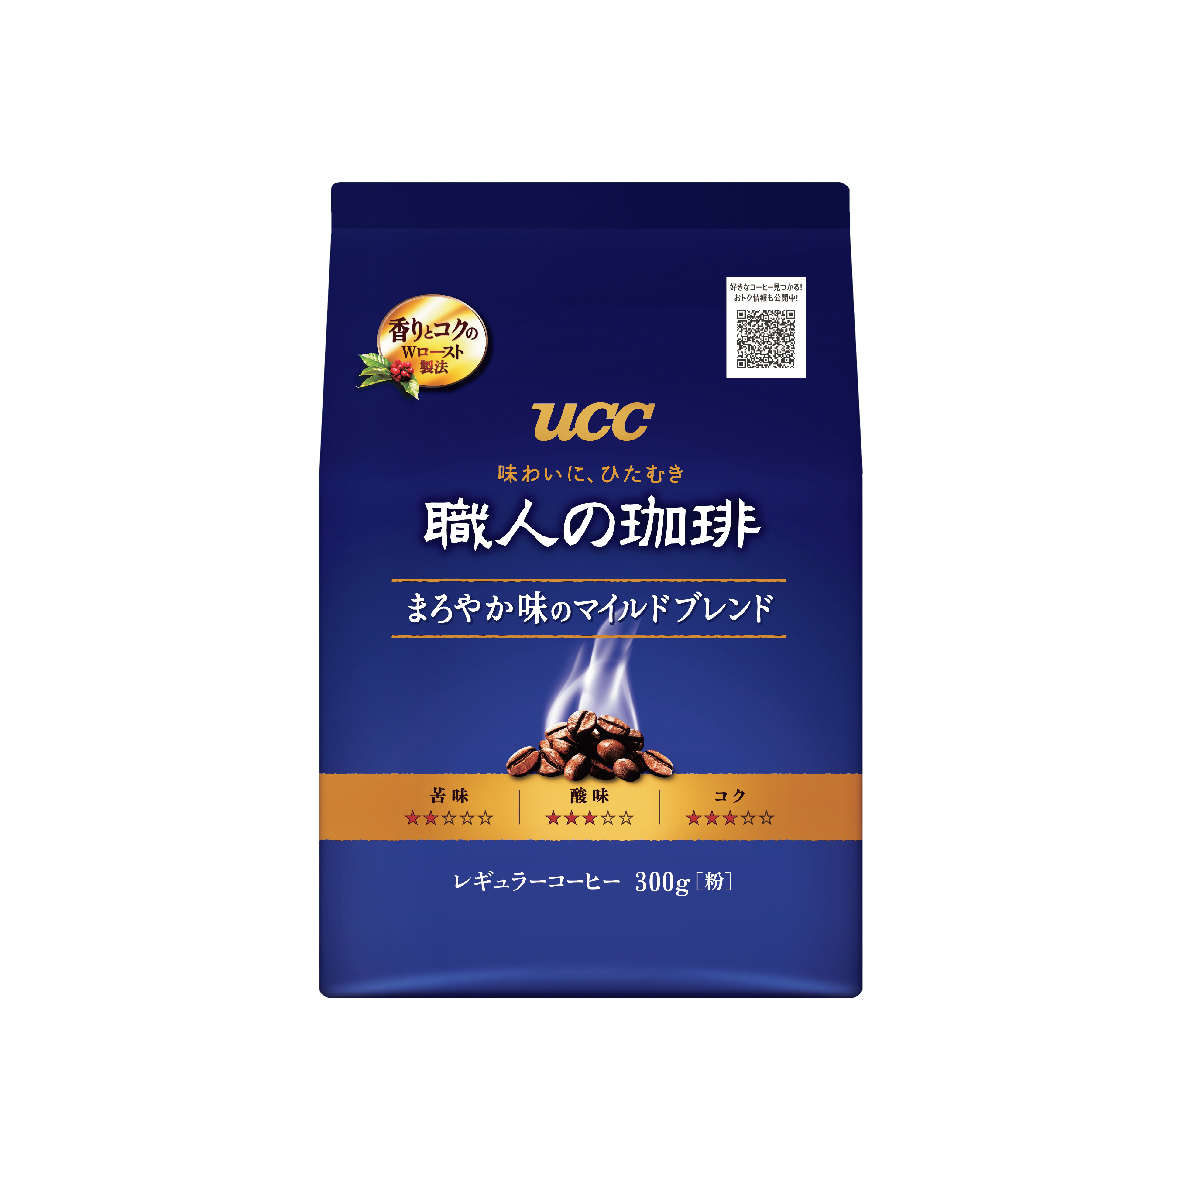 UCC Craftsman’s Coffee Mild Roasted Coffee